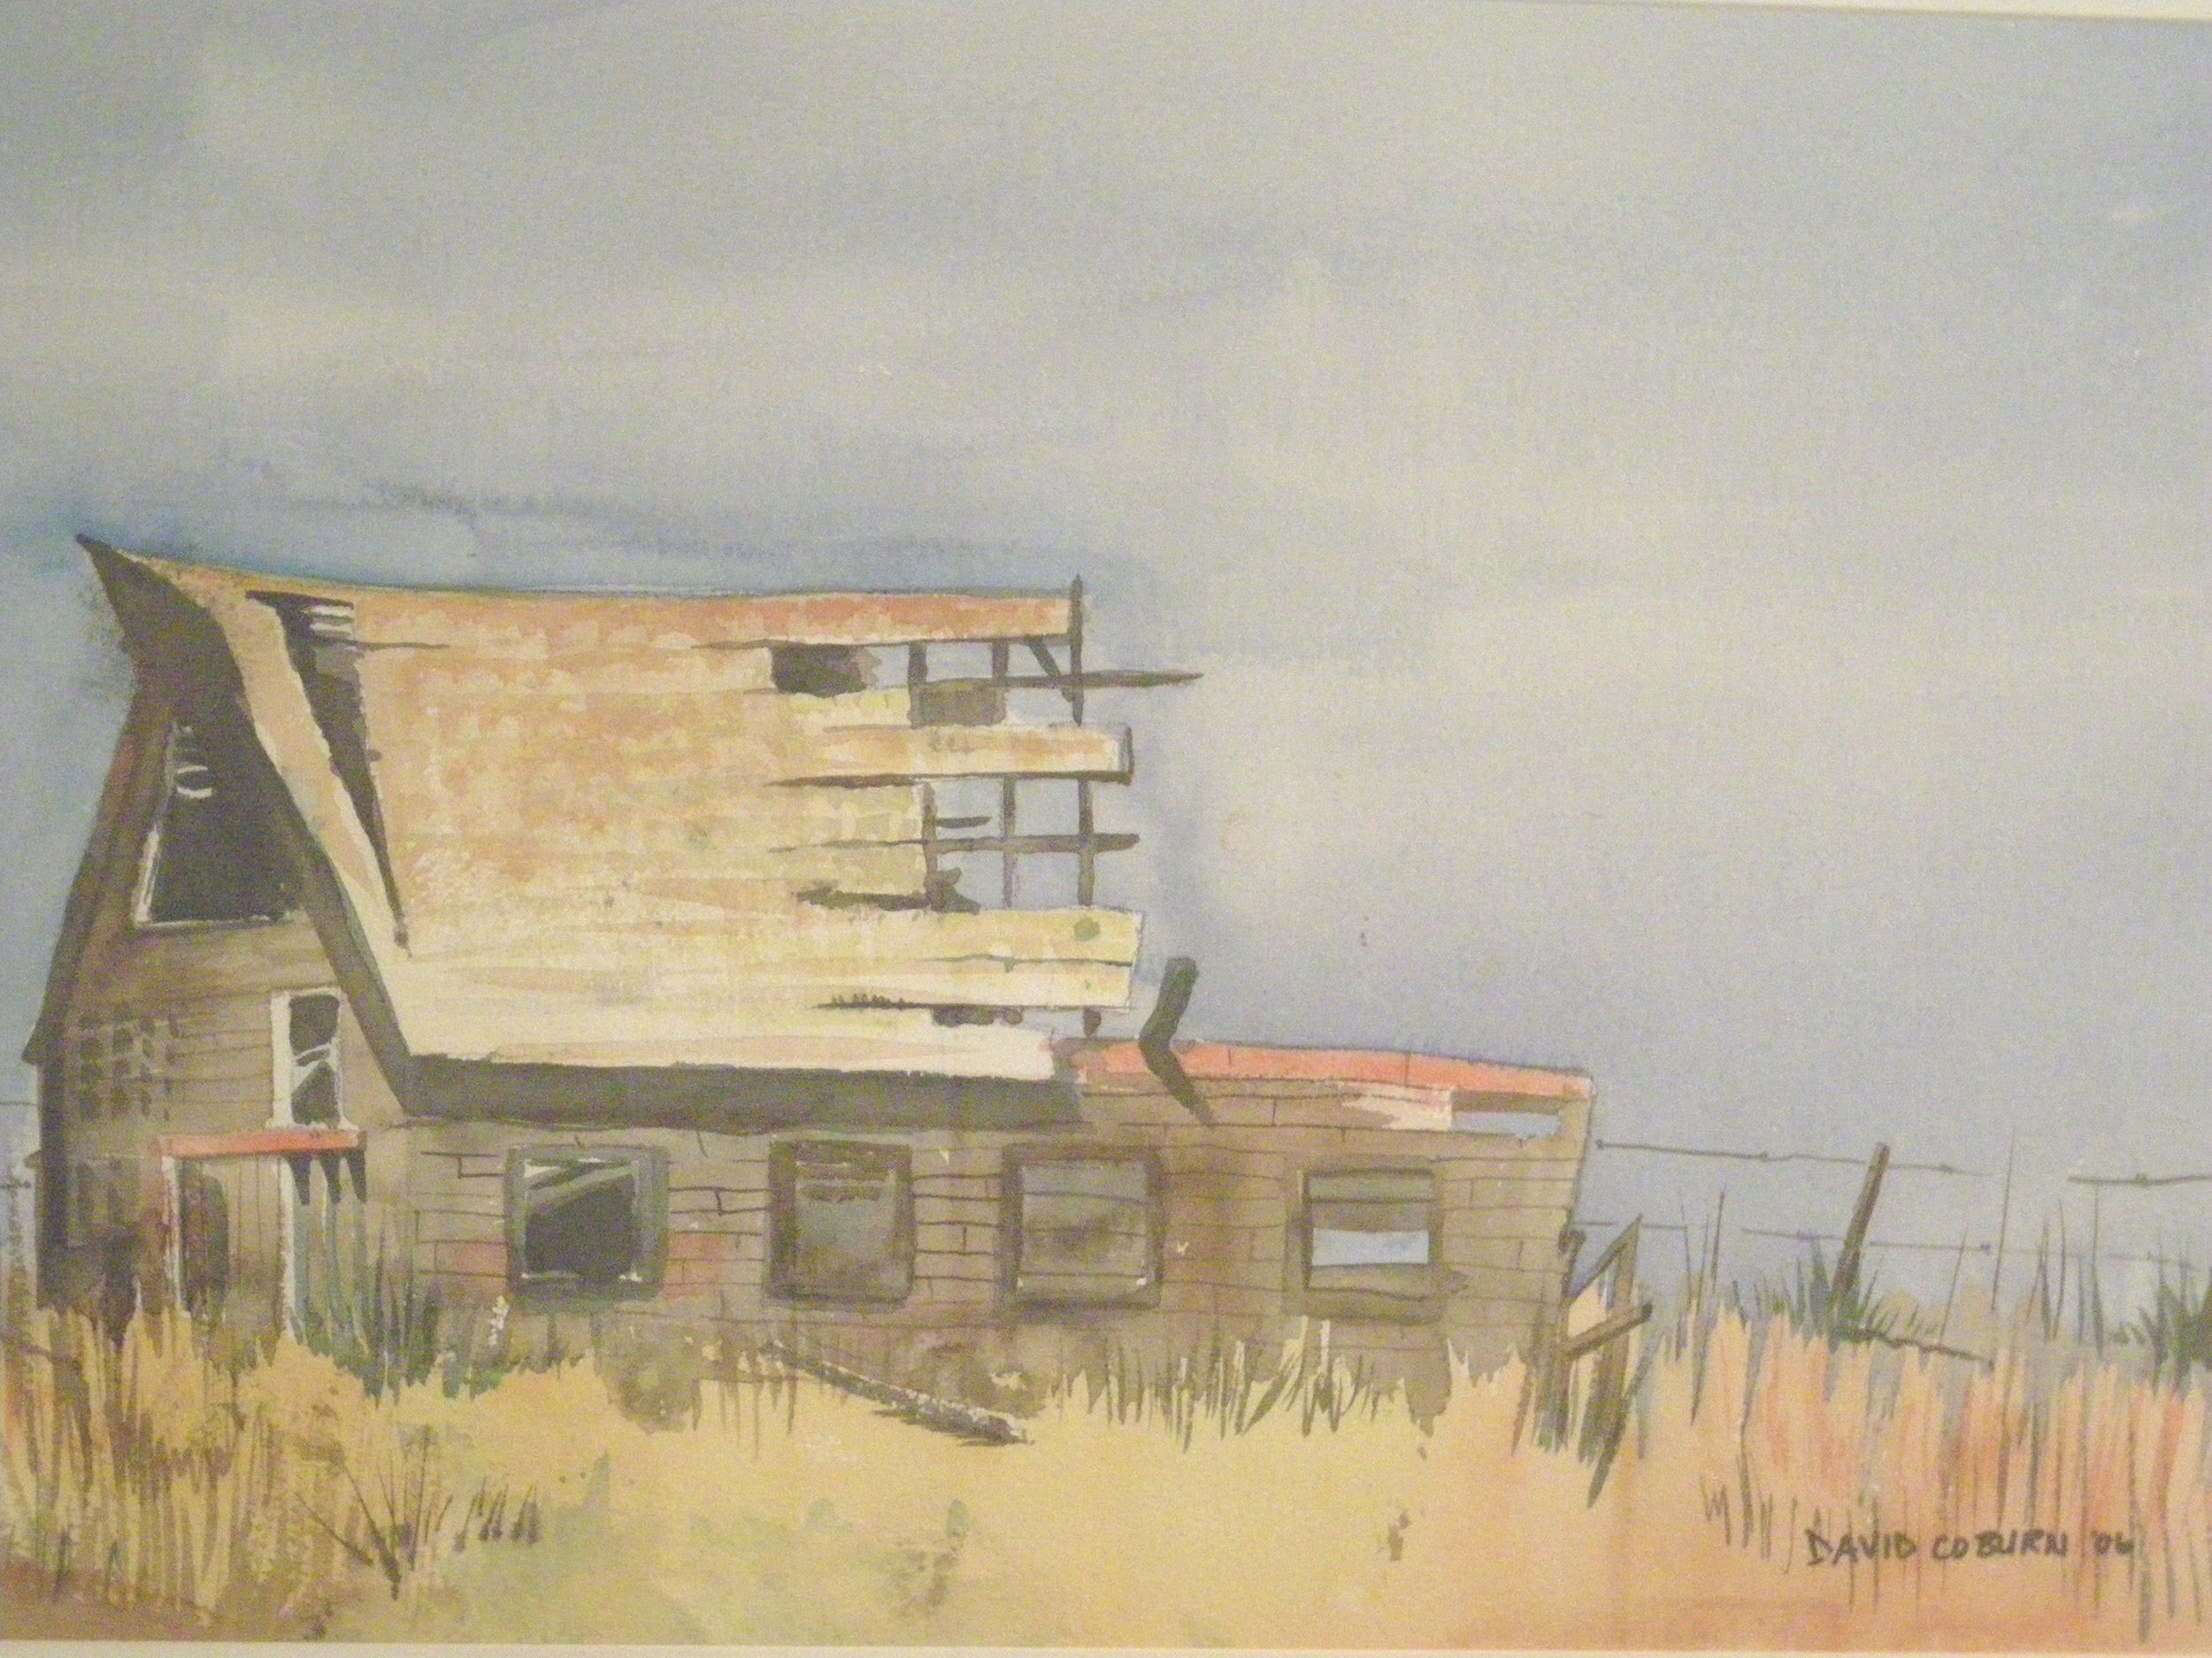 Broken Barn  - Watercolor 59cmx38cm €SOLD€